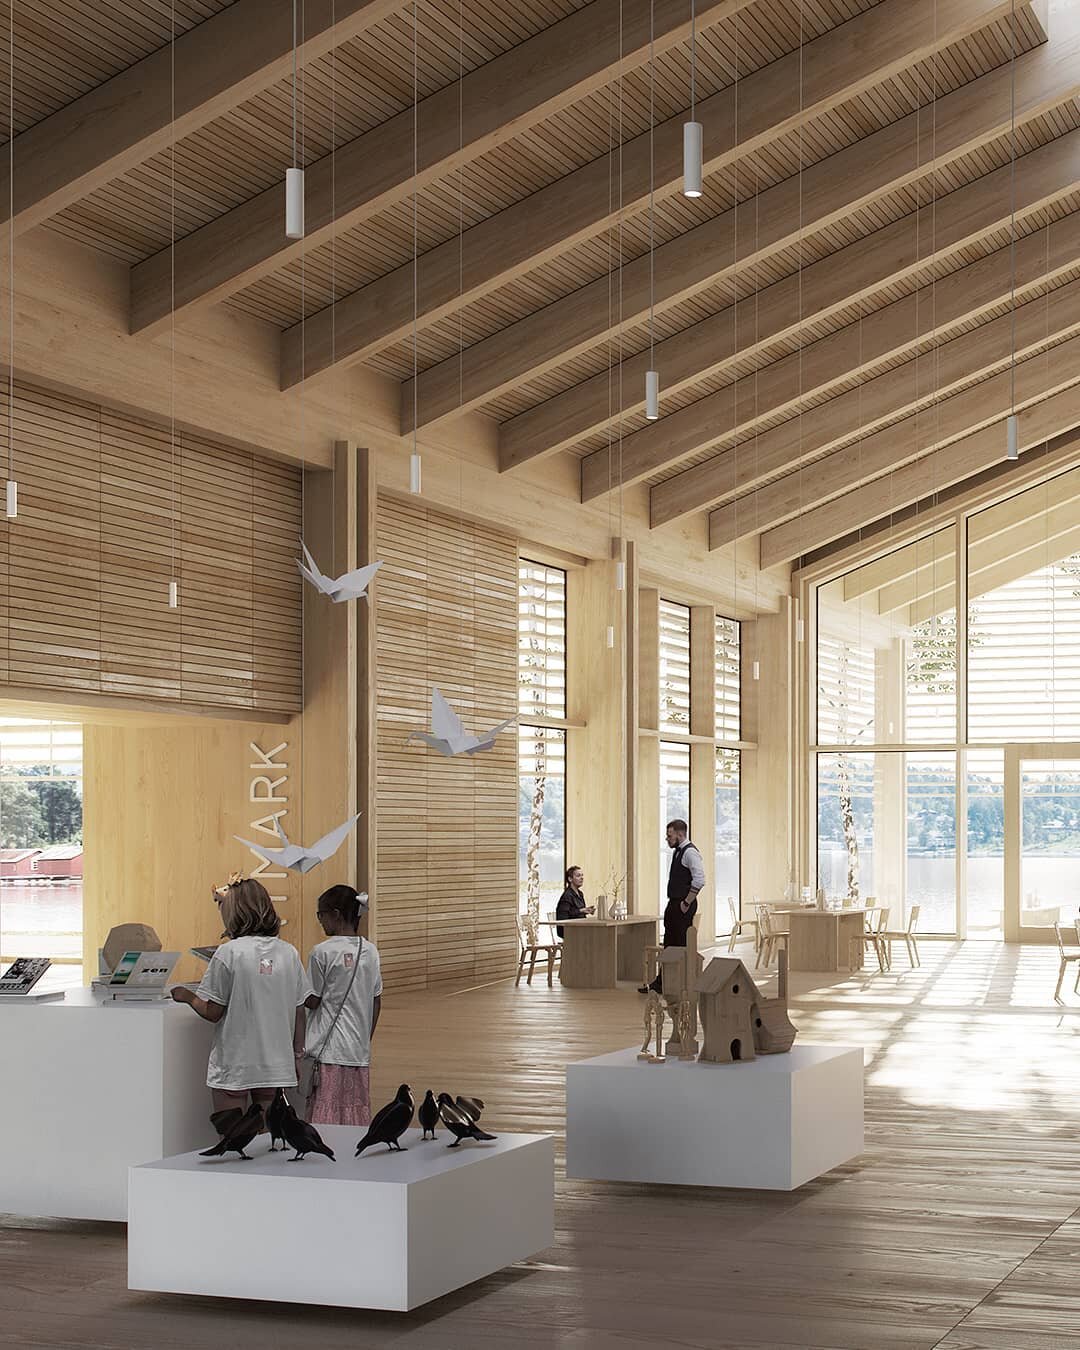 From the archive / Our proposal for Fl&oslash;tingsmuseum in Fetsund, Norway, 2020

Render: @sonnyholmberg 

#tuliniuslind #danisharchitecture #rendering #danskarkitektur #woodhouse